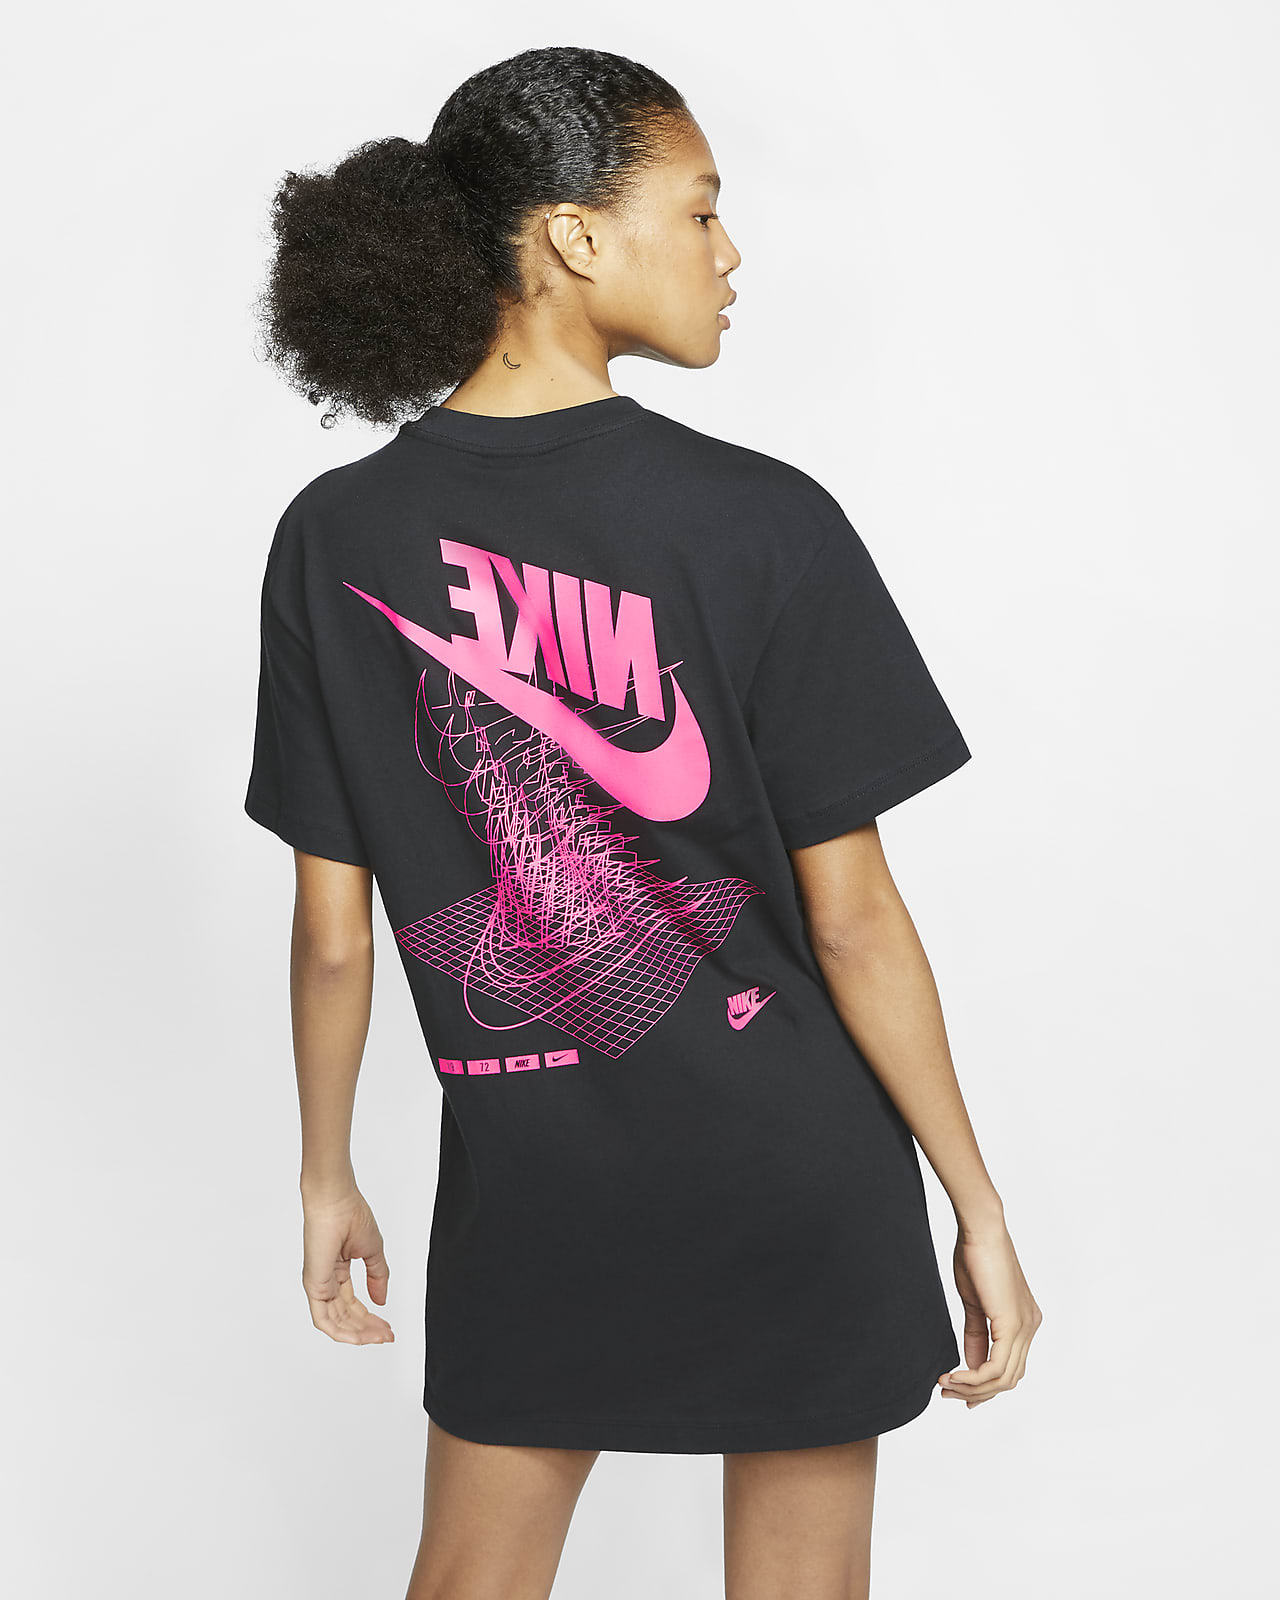 Nike Sportswear Women's T-Shirt Dress. Nike HU